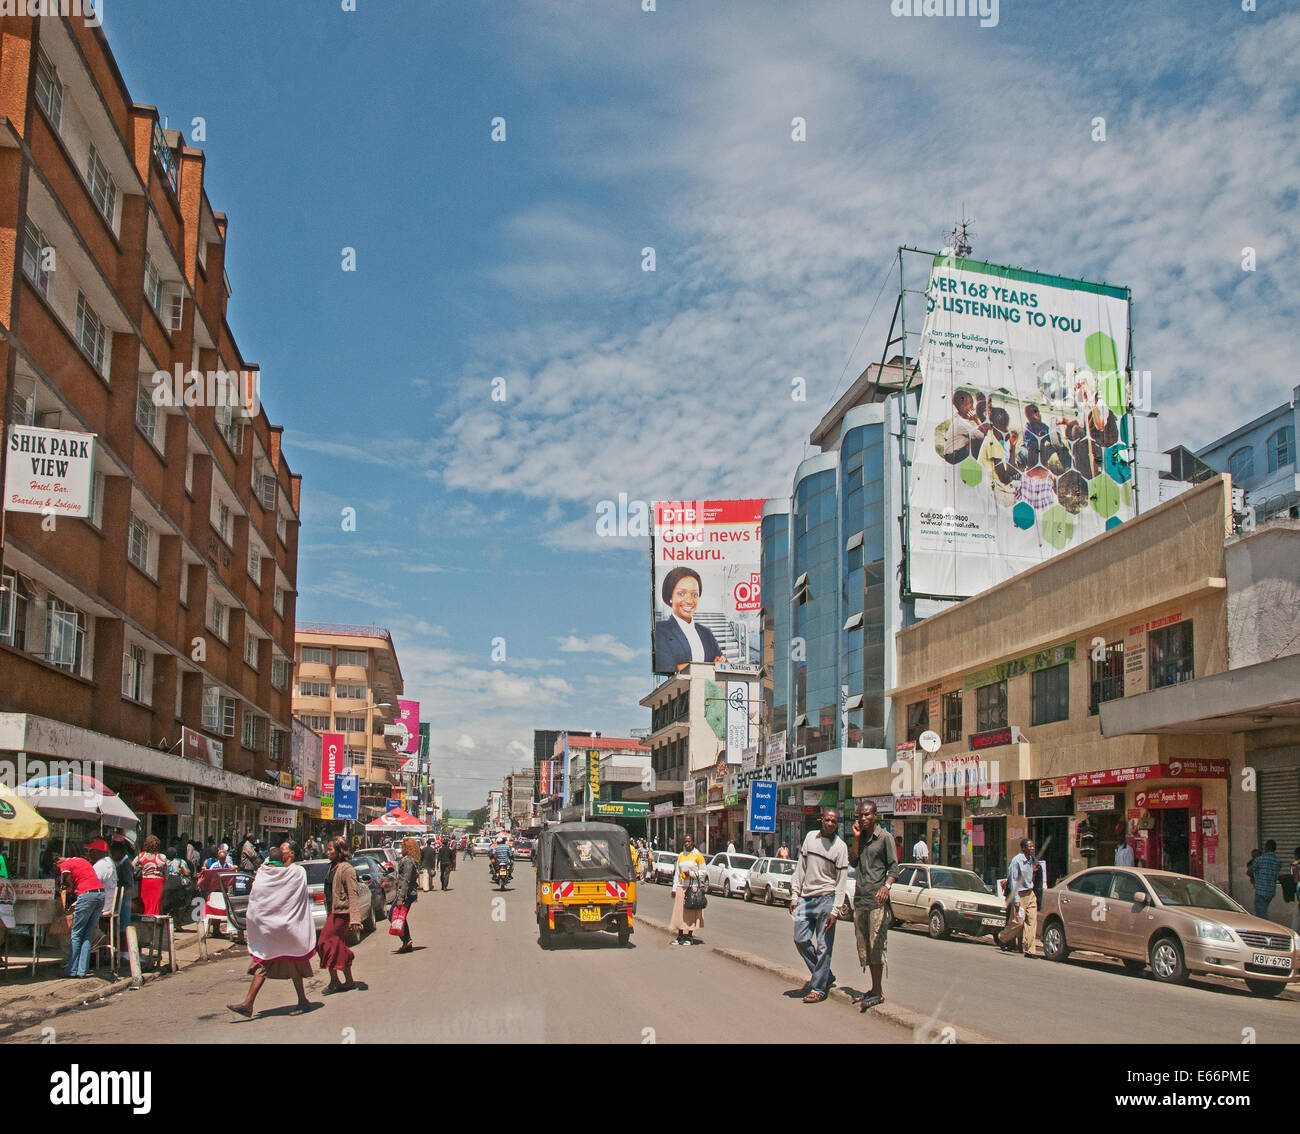 People and traffic on Kenyatta Avenue Nakuru Kenya East Africa with advertising hoardings shops and Piaggio Ape three wheel taxi Stock Photo